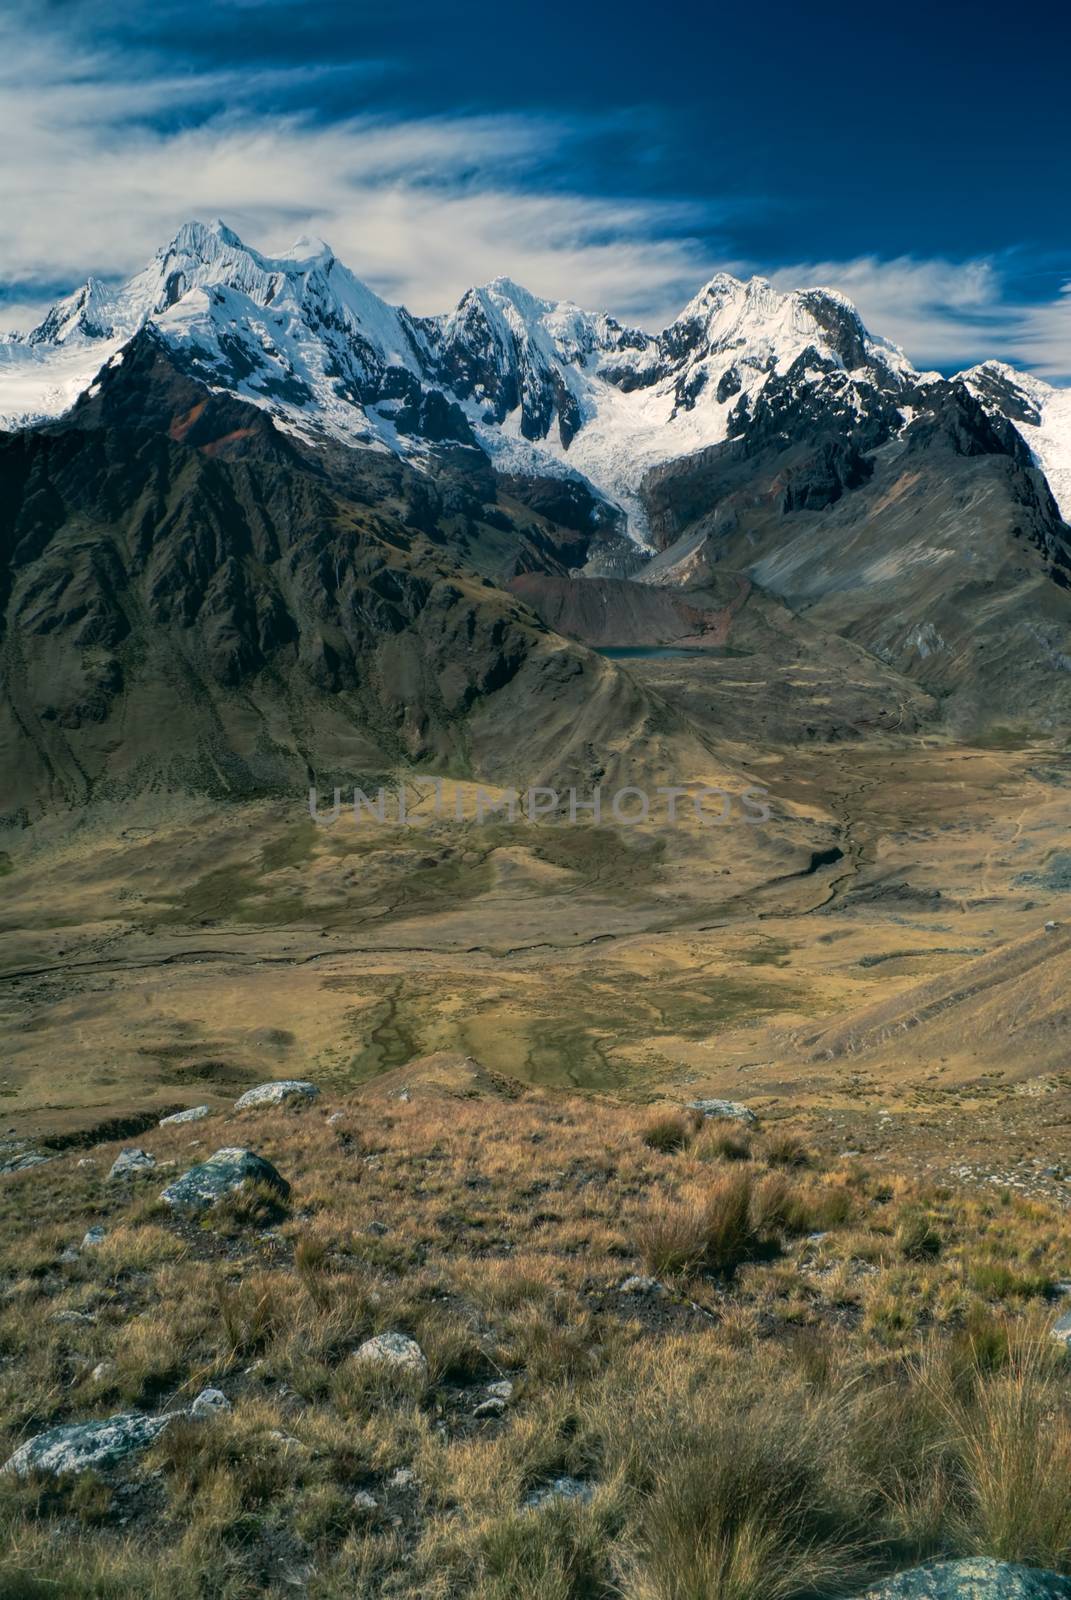 Beautiful scenery around Alpamayo, one of highest mountain peaks in Peruvian Andes, Cordillera Blanca